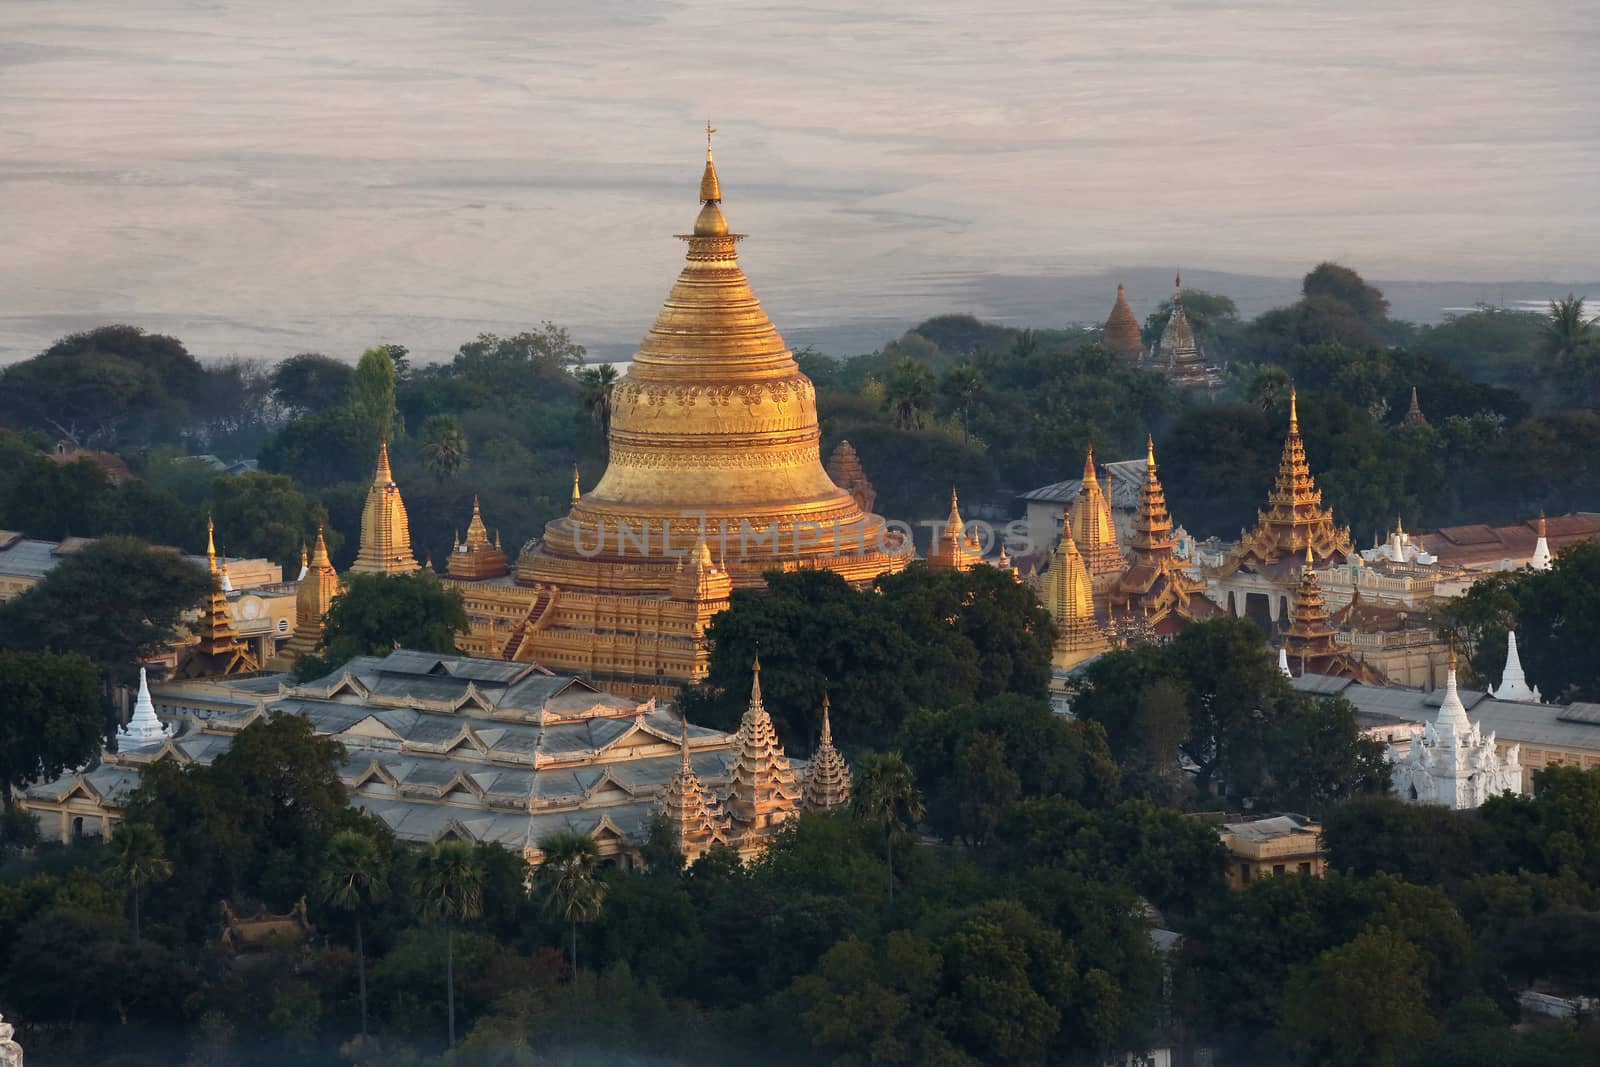 Early morning aerial view of the Shwezigon Pagoda near the Irrawaddy River in Bagan in Myanmar (Burma).